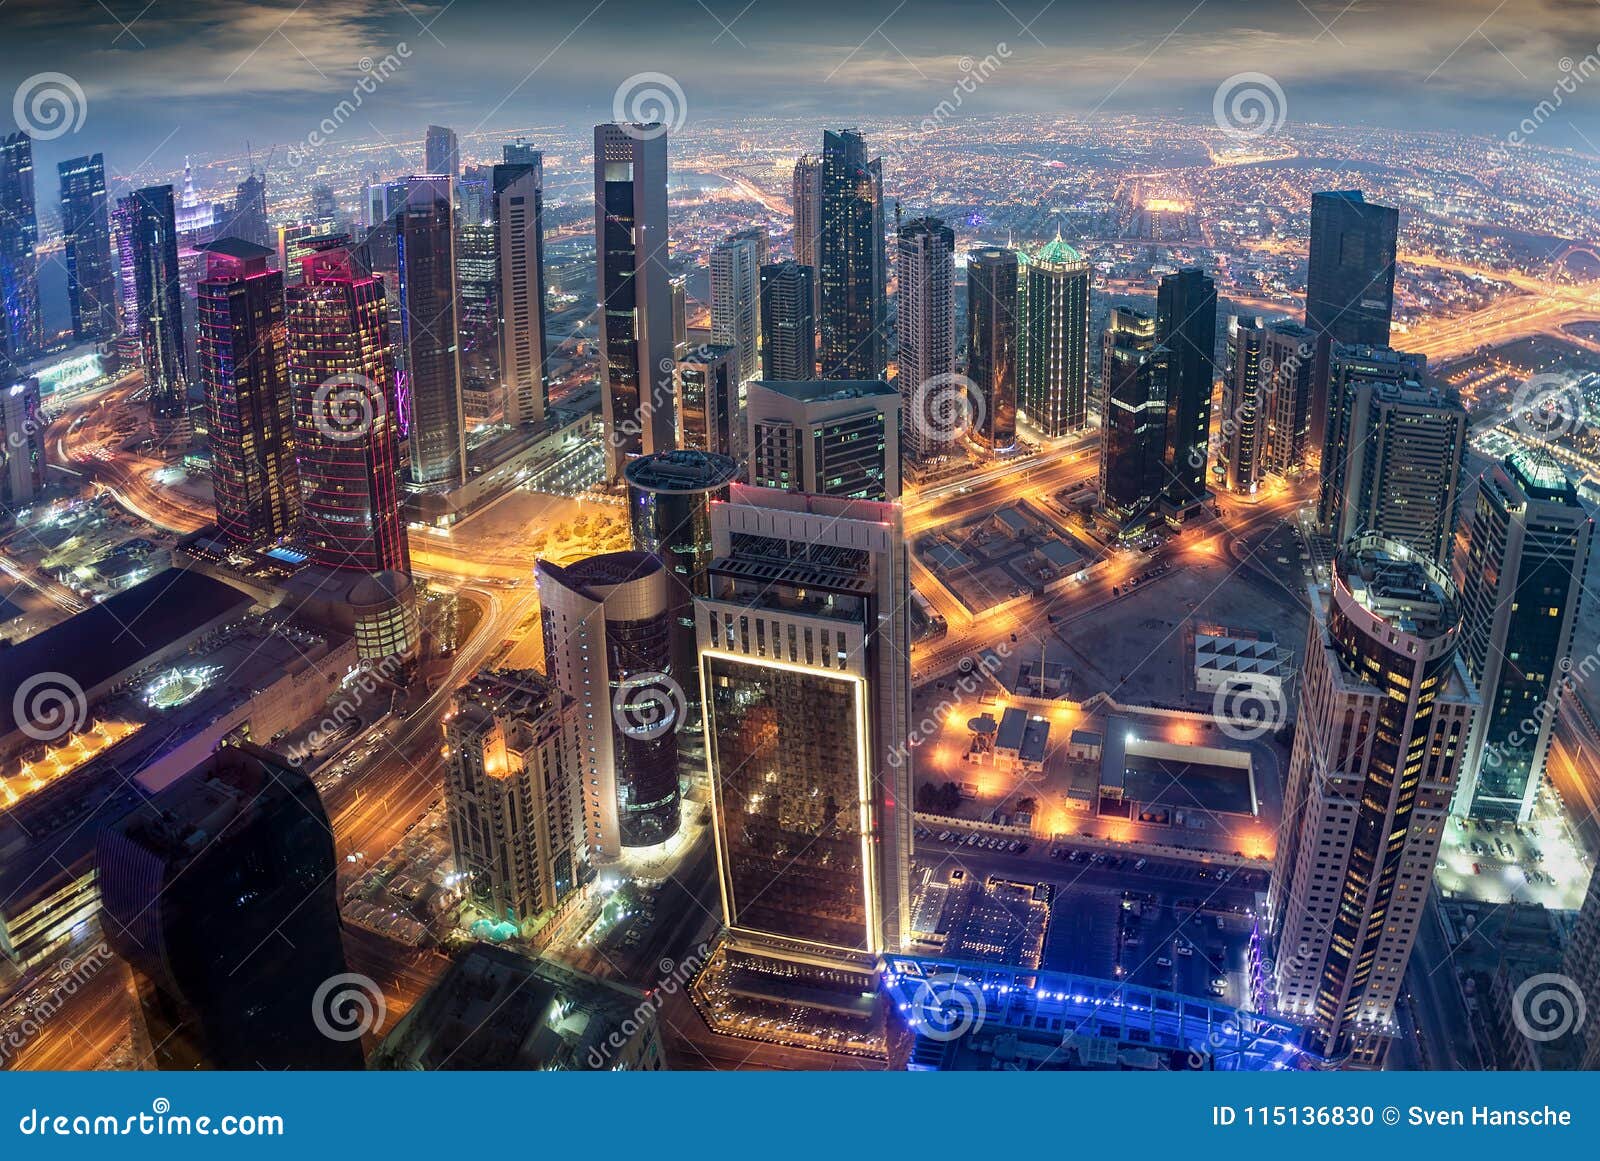 aerial view to the illuminated city center of doha, qatar